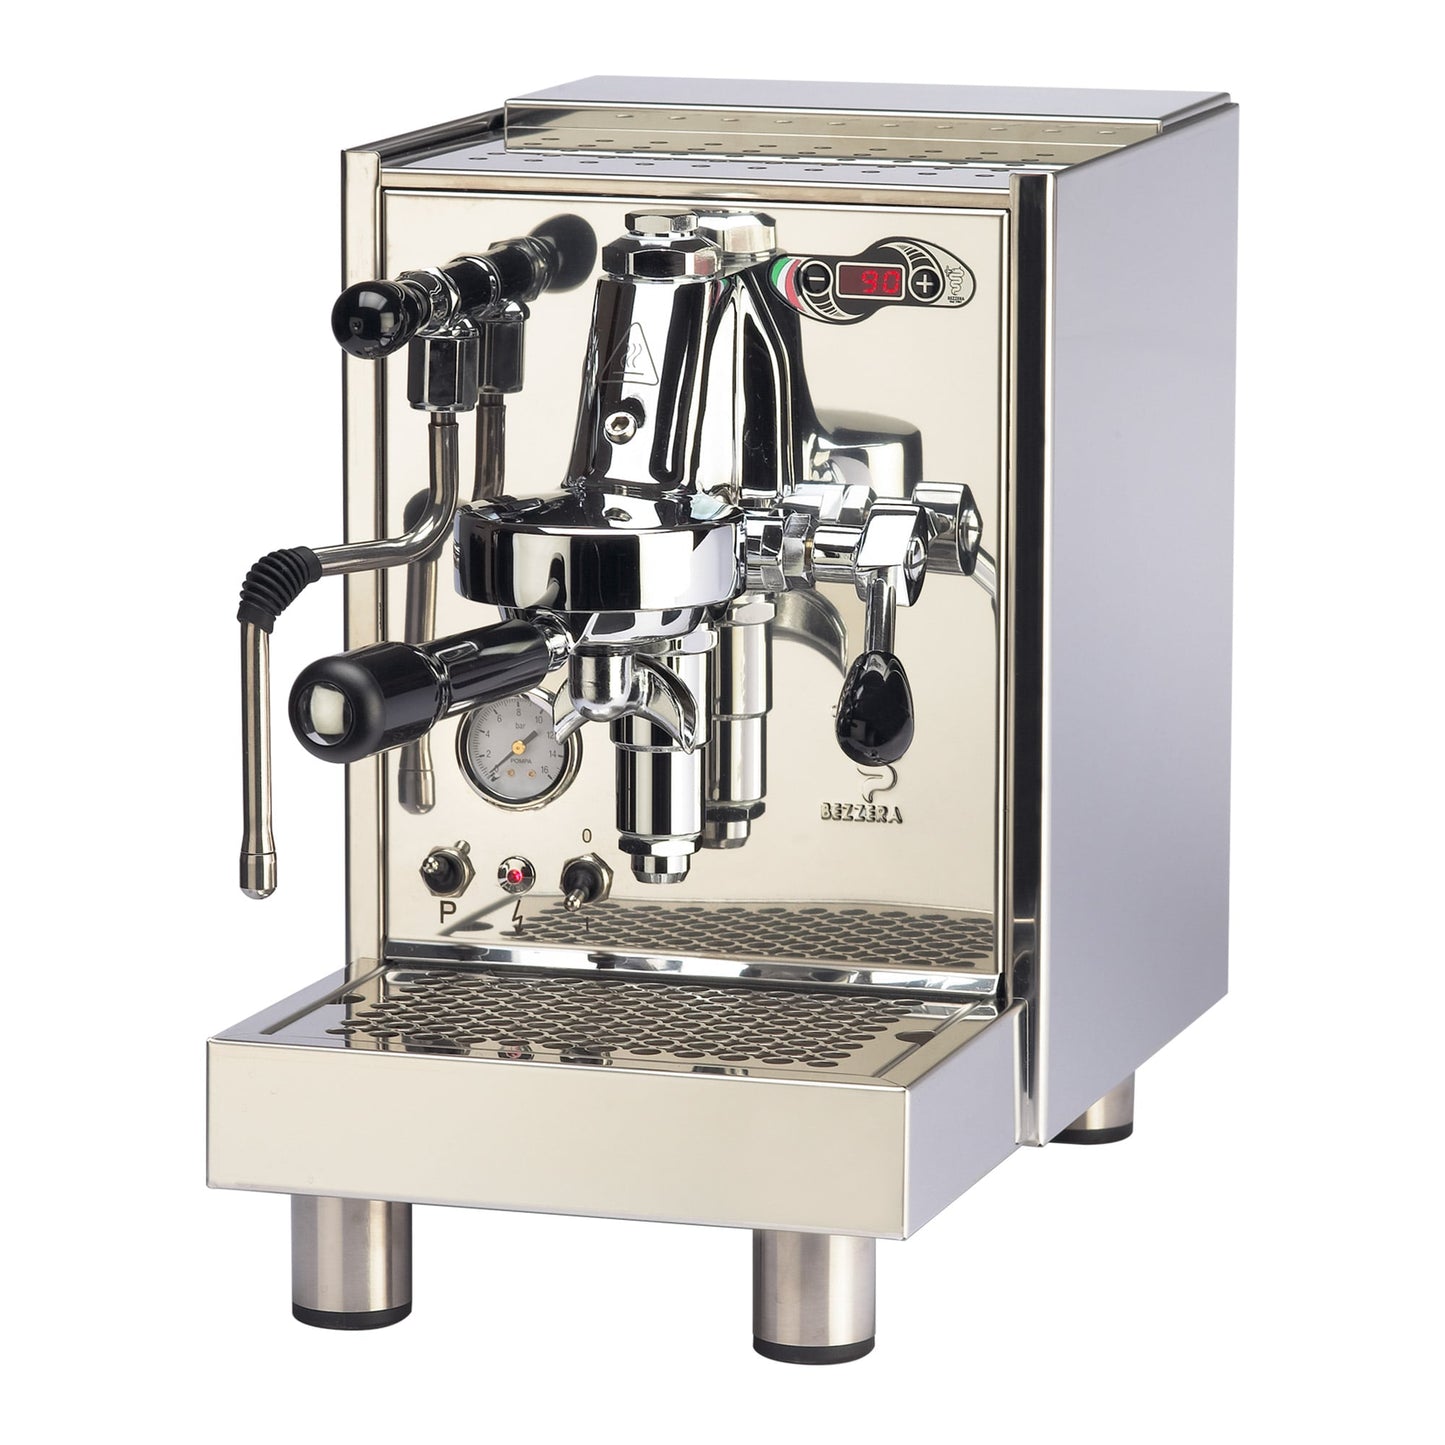 Bezzera Unica P.I.D. Espressomaschine